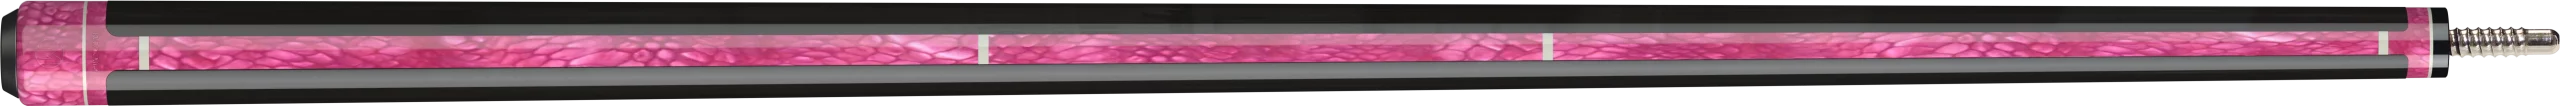 std 2024 - kuro - cmi-4 - pink dragon - molinari billiards carbon cue - full